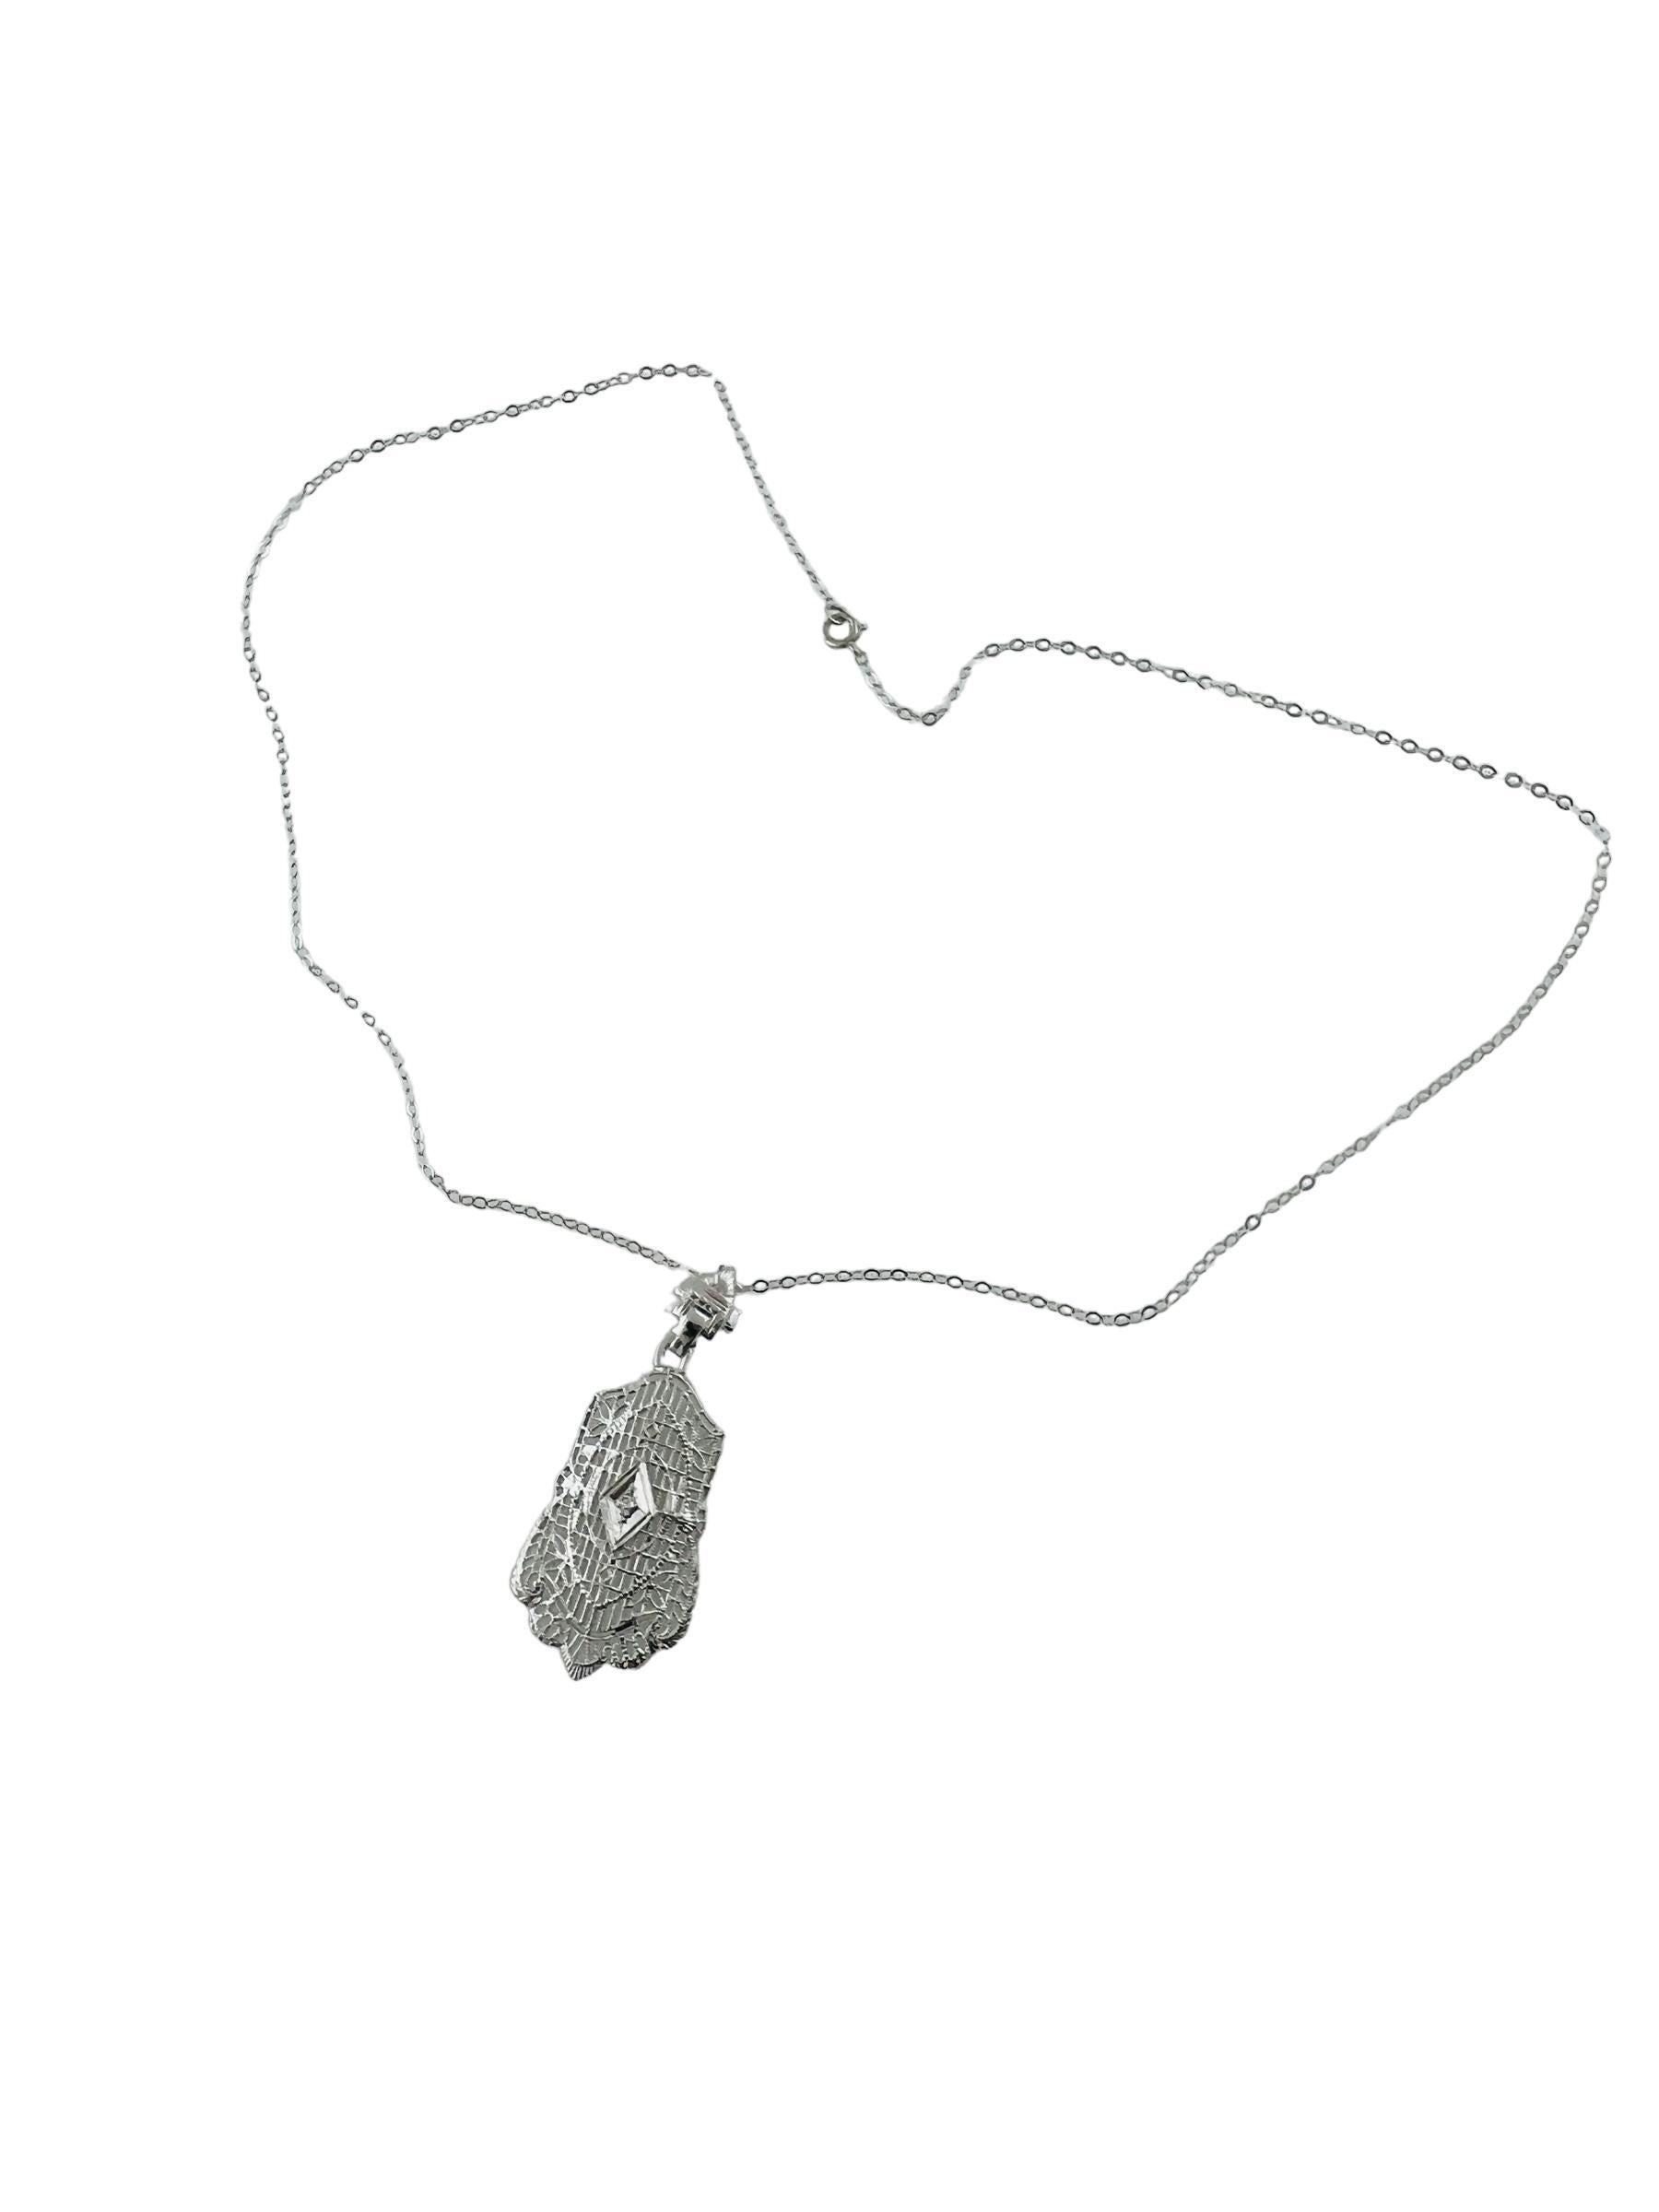 14K White Gold Diamond Filigree Pendant Necklace #16580 For Sale 1